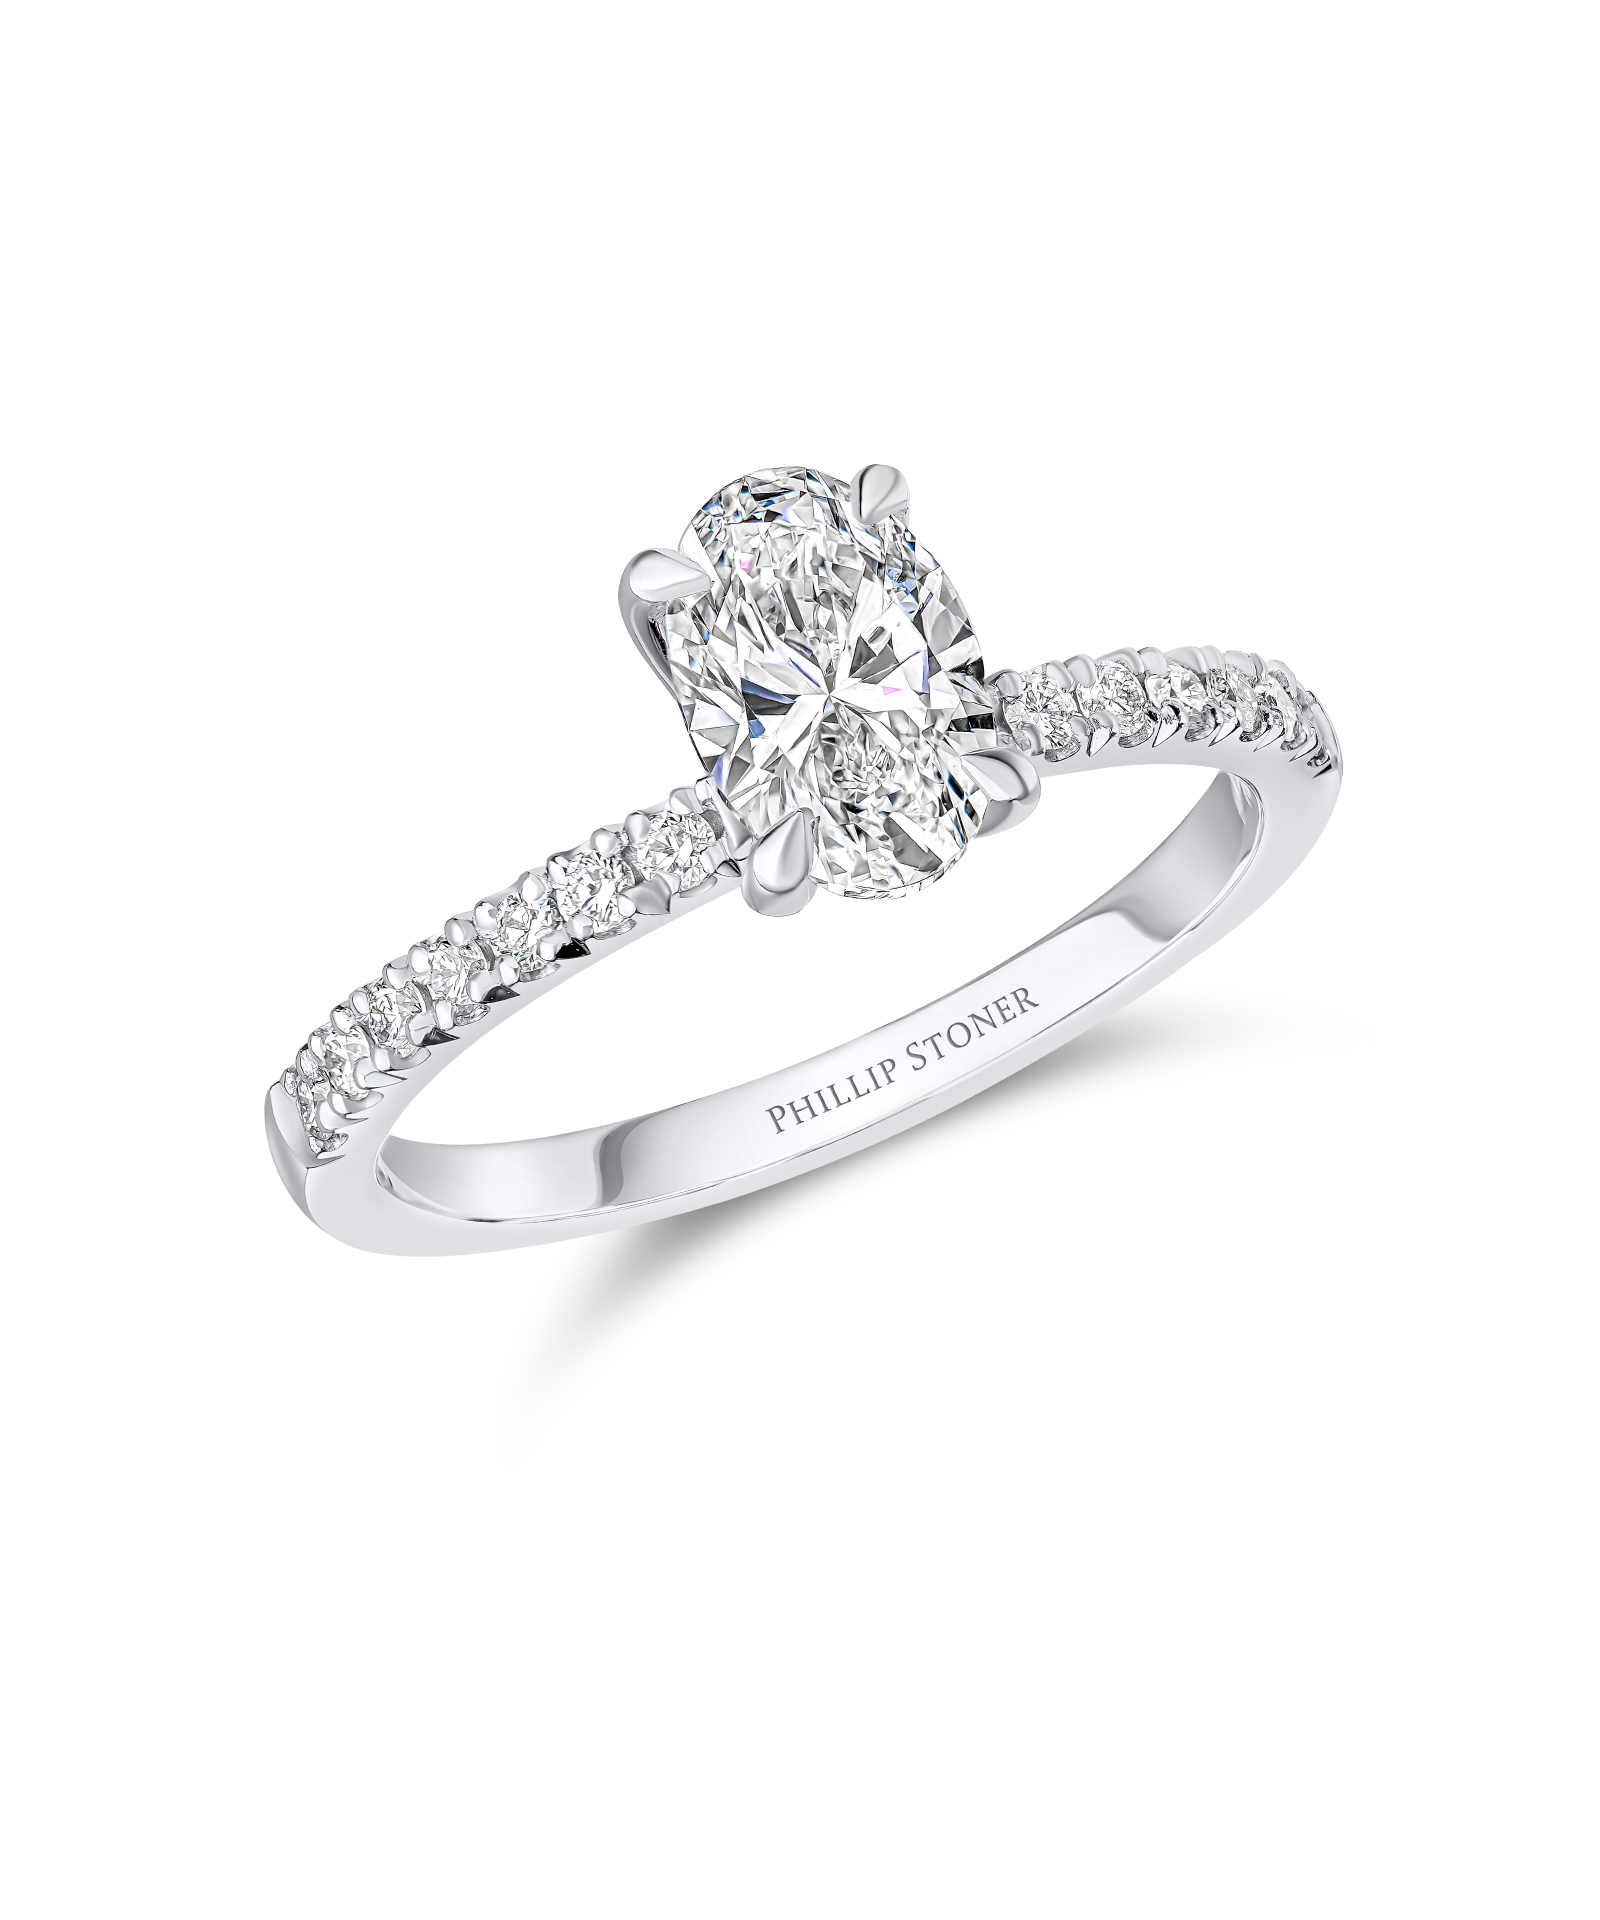 1ct Oval Cut Diamond Set Nova Engagement Ring - Phillip Stoner The Jeweller